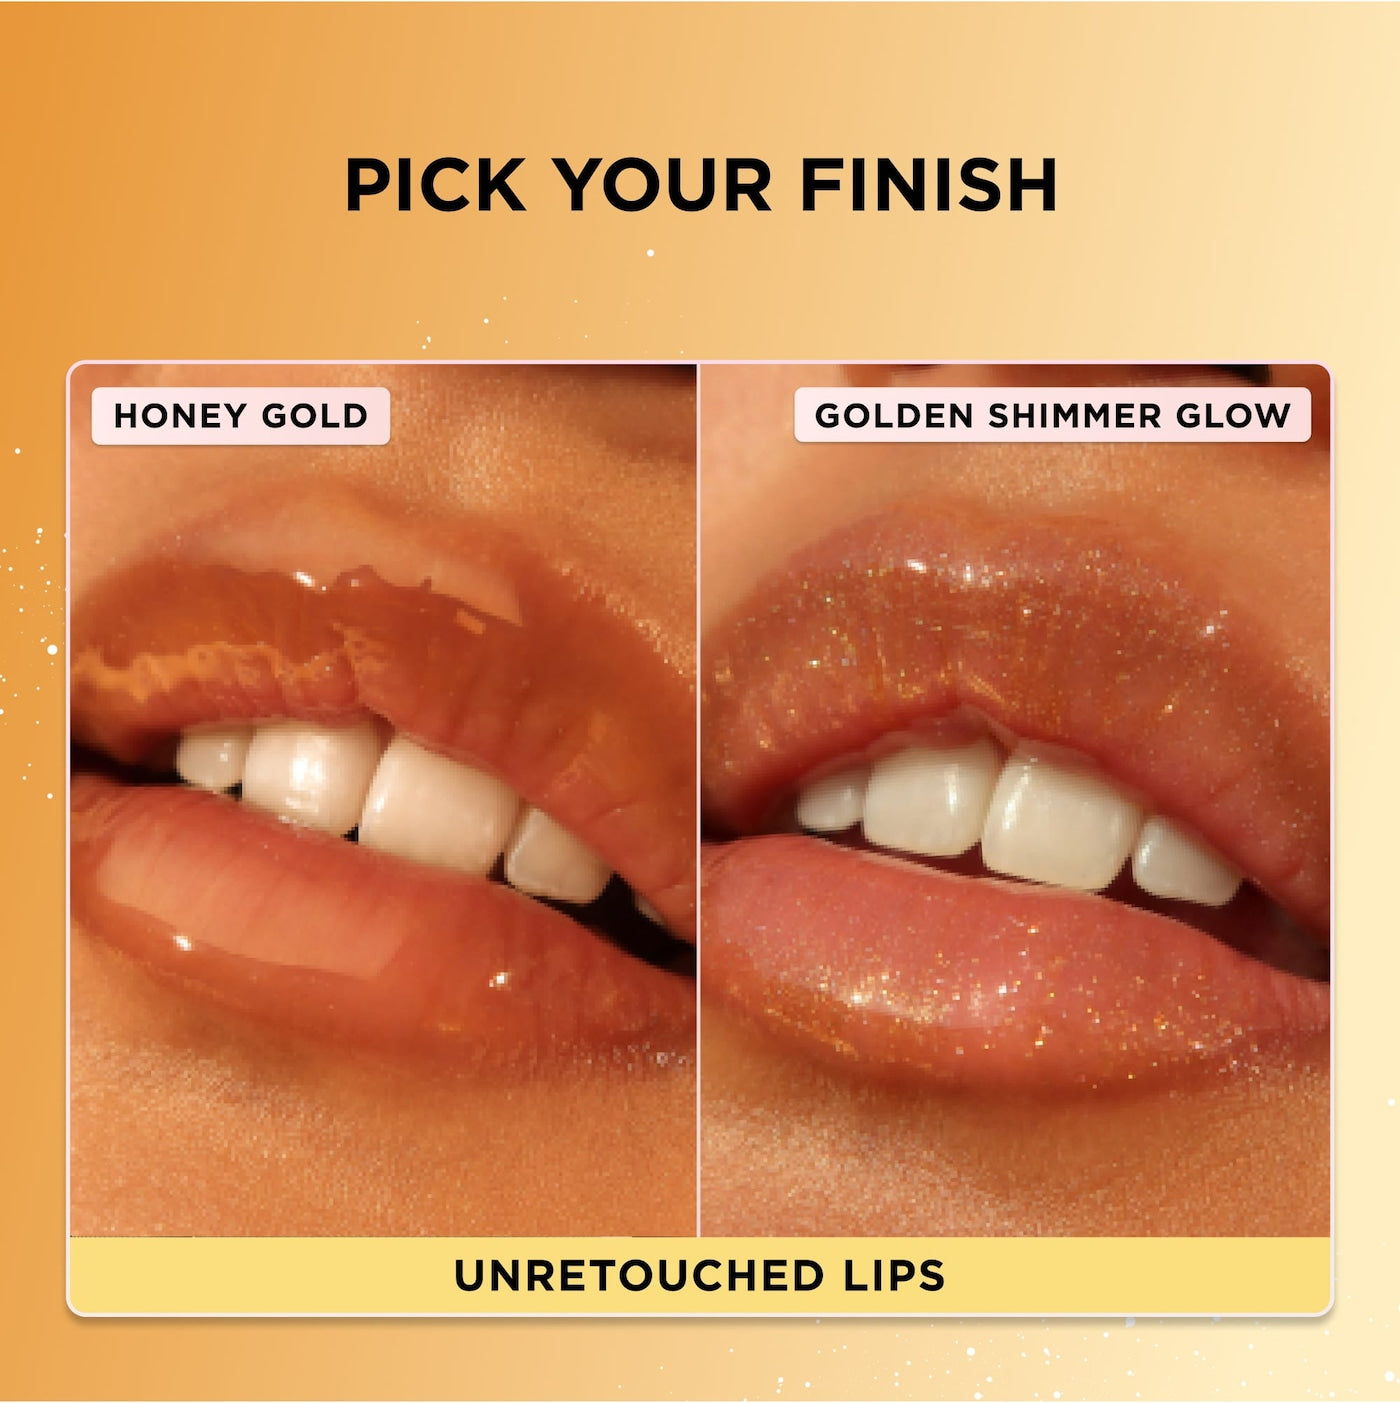 Gisou - Honey Infused Hydrating Lip Oil -shimmer finish